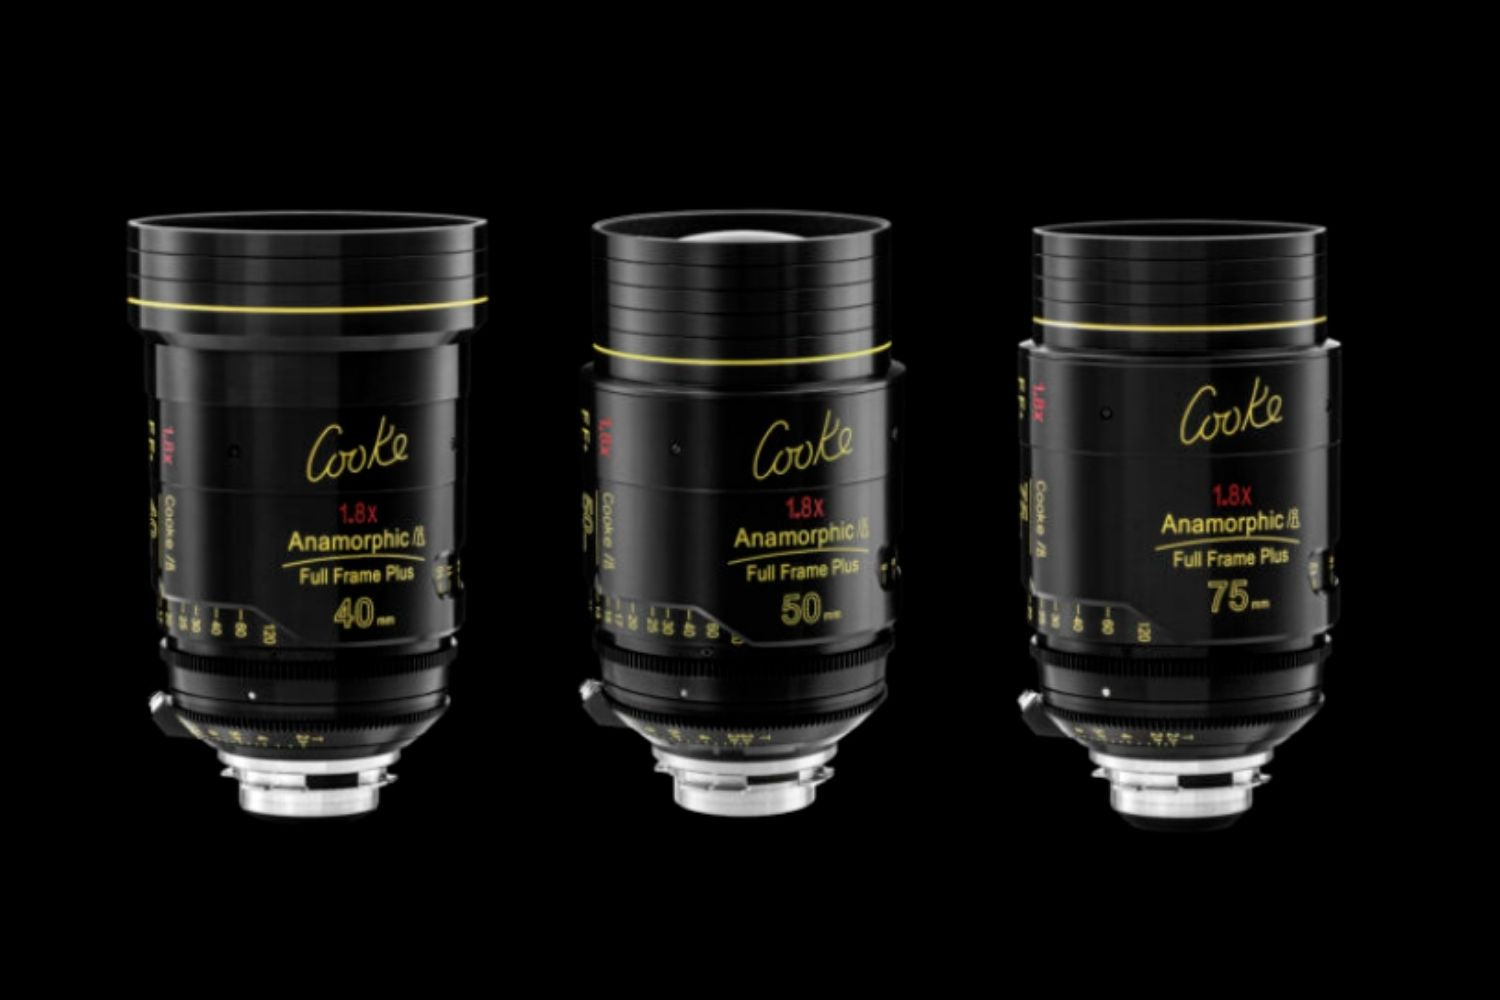 Cooke Anamorphic/i Prime Lens